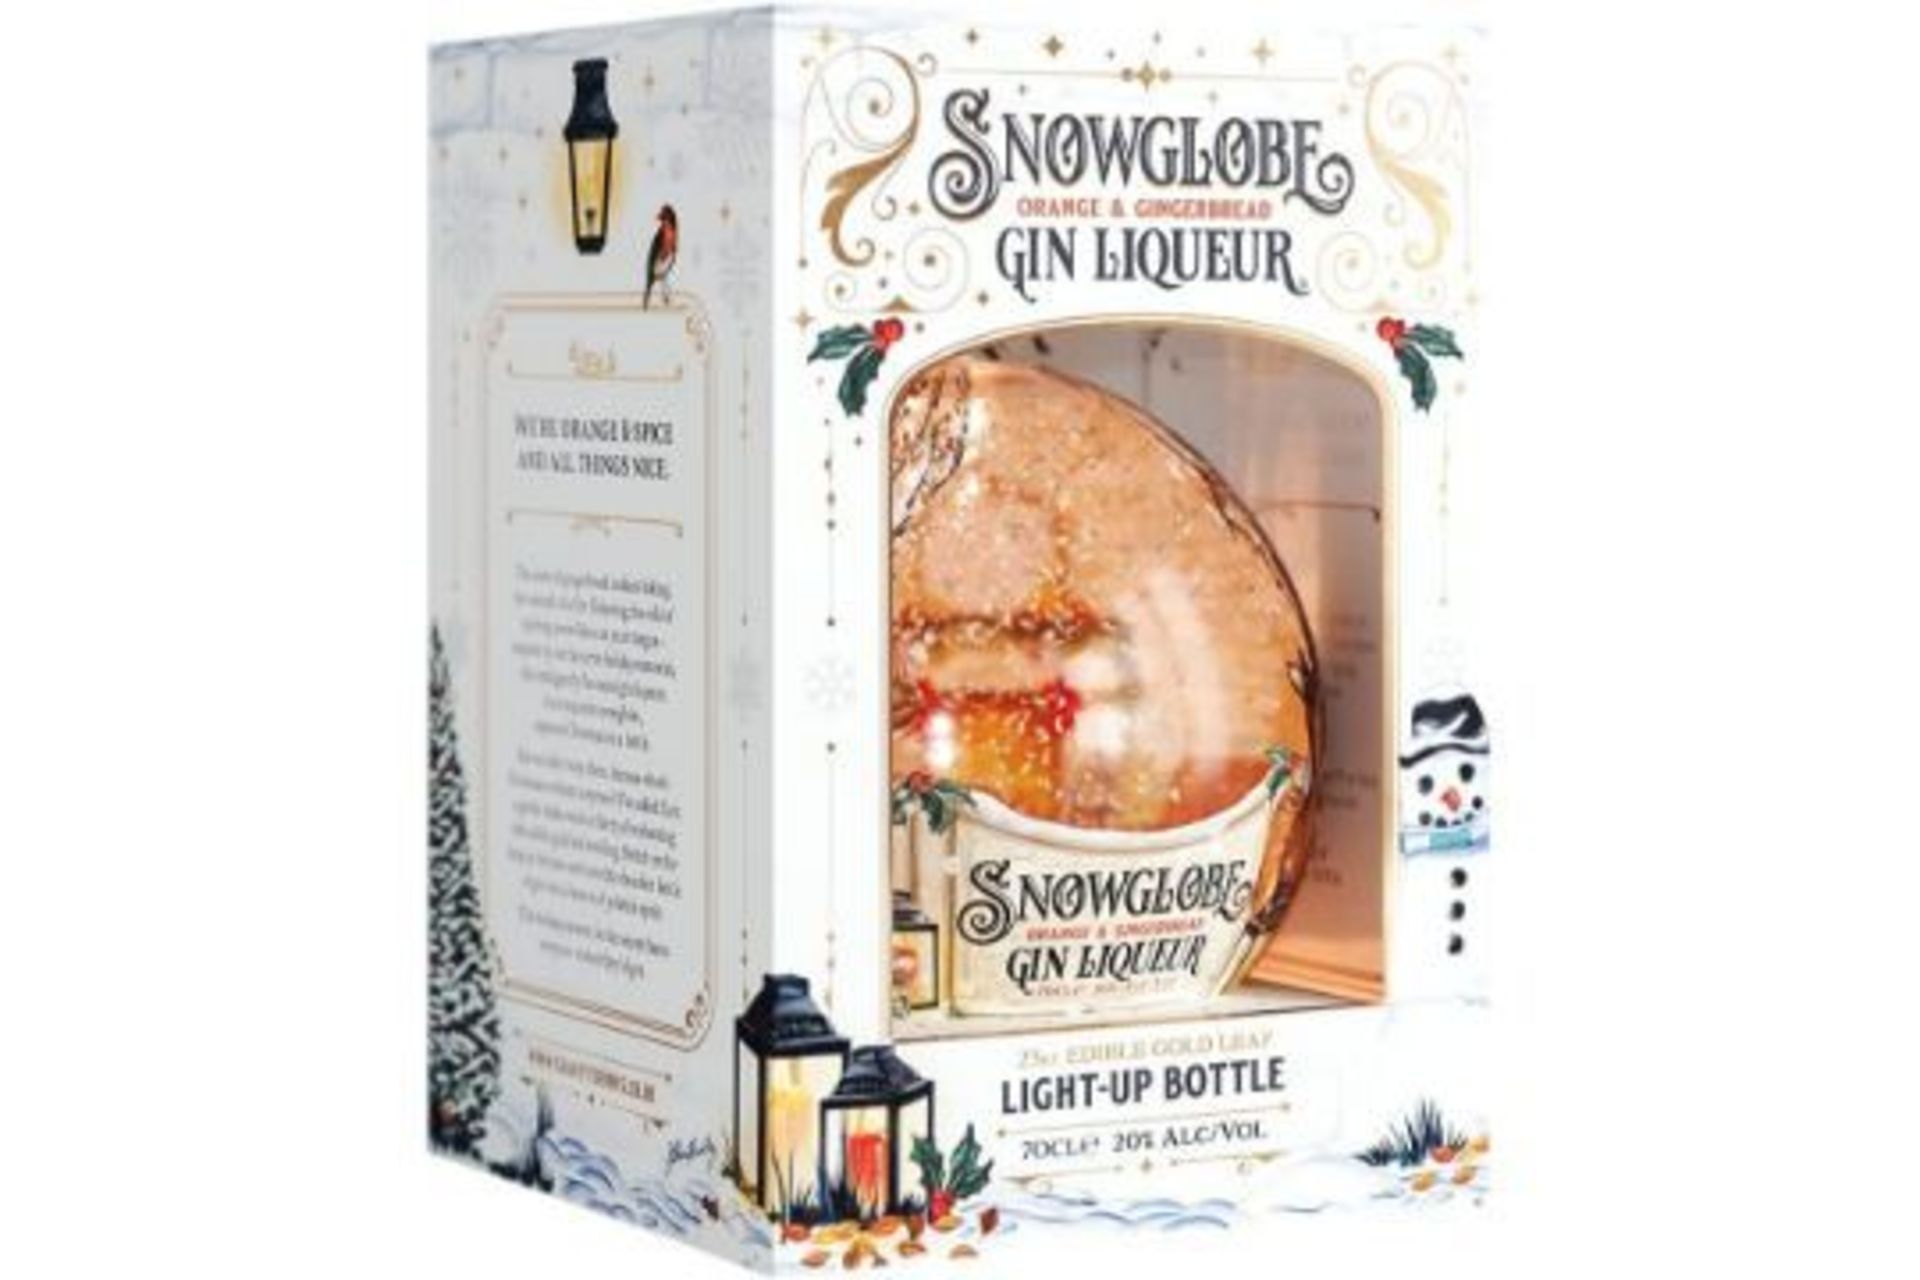 TRADE LOT 10 X NEW BOXED Snow Globe Gin Liqueur Orange & Gingerbread Gin Liqueur, 70cl. (OFC)